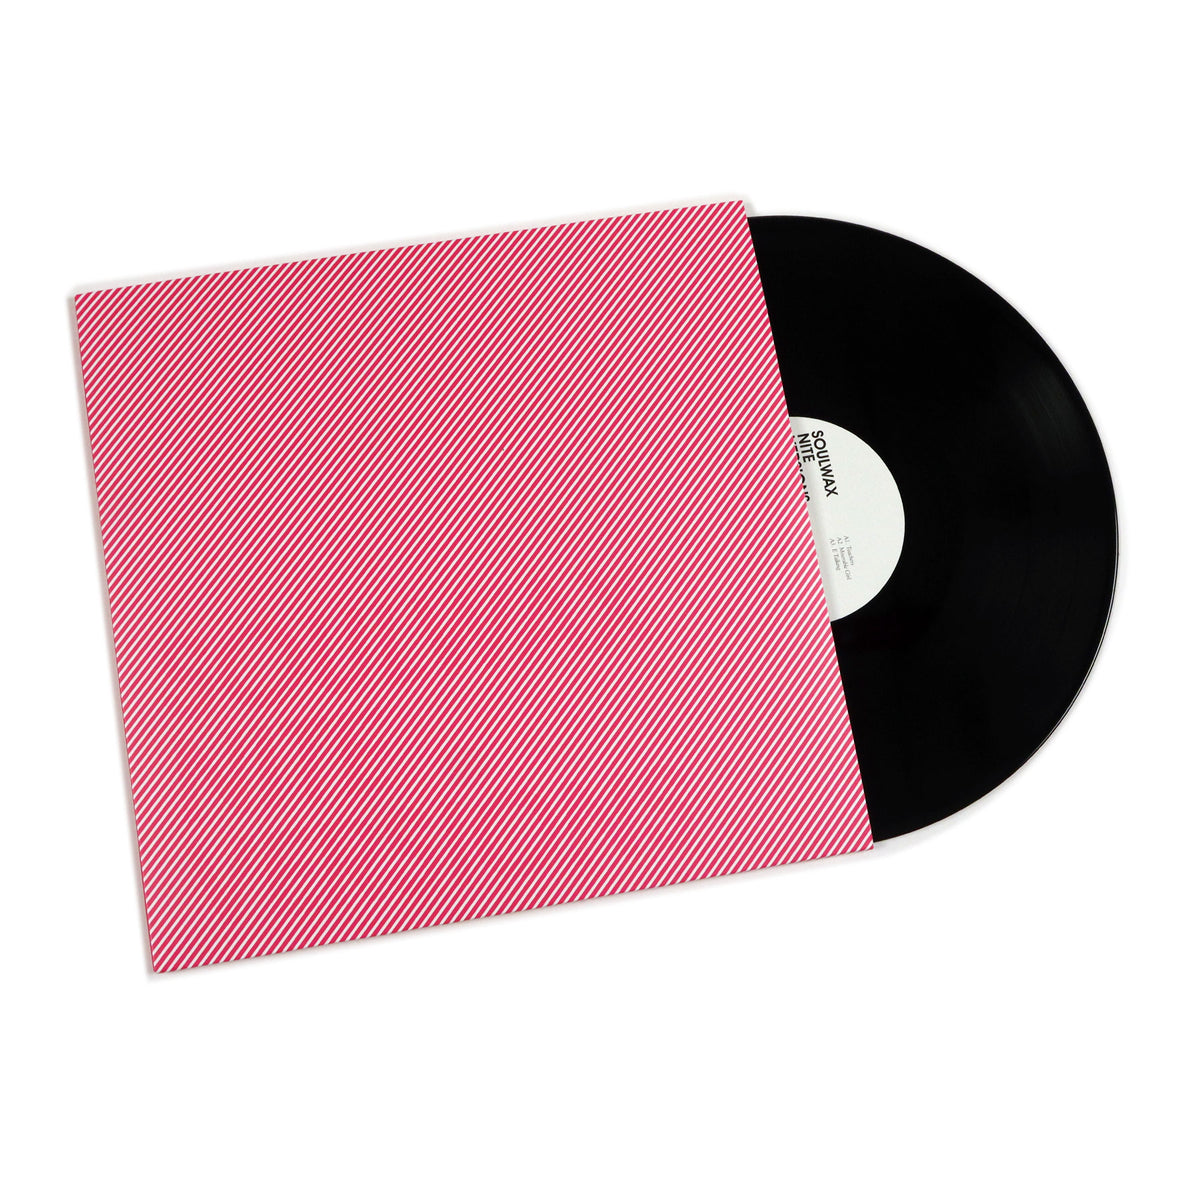 Soulwax: Nite Versions (Mixed) Vinyl 2LP